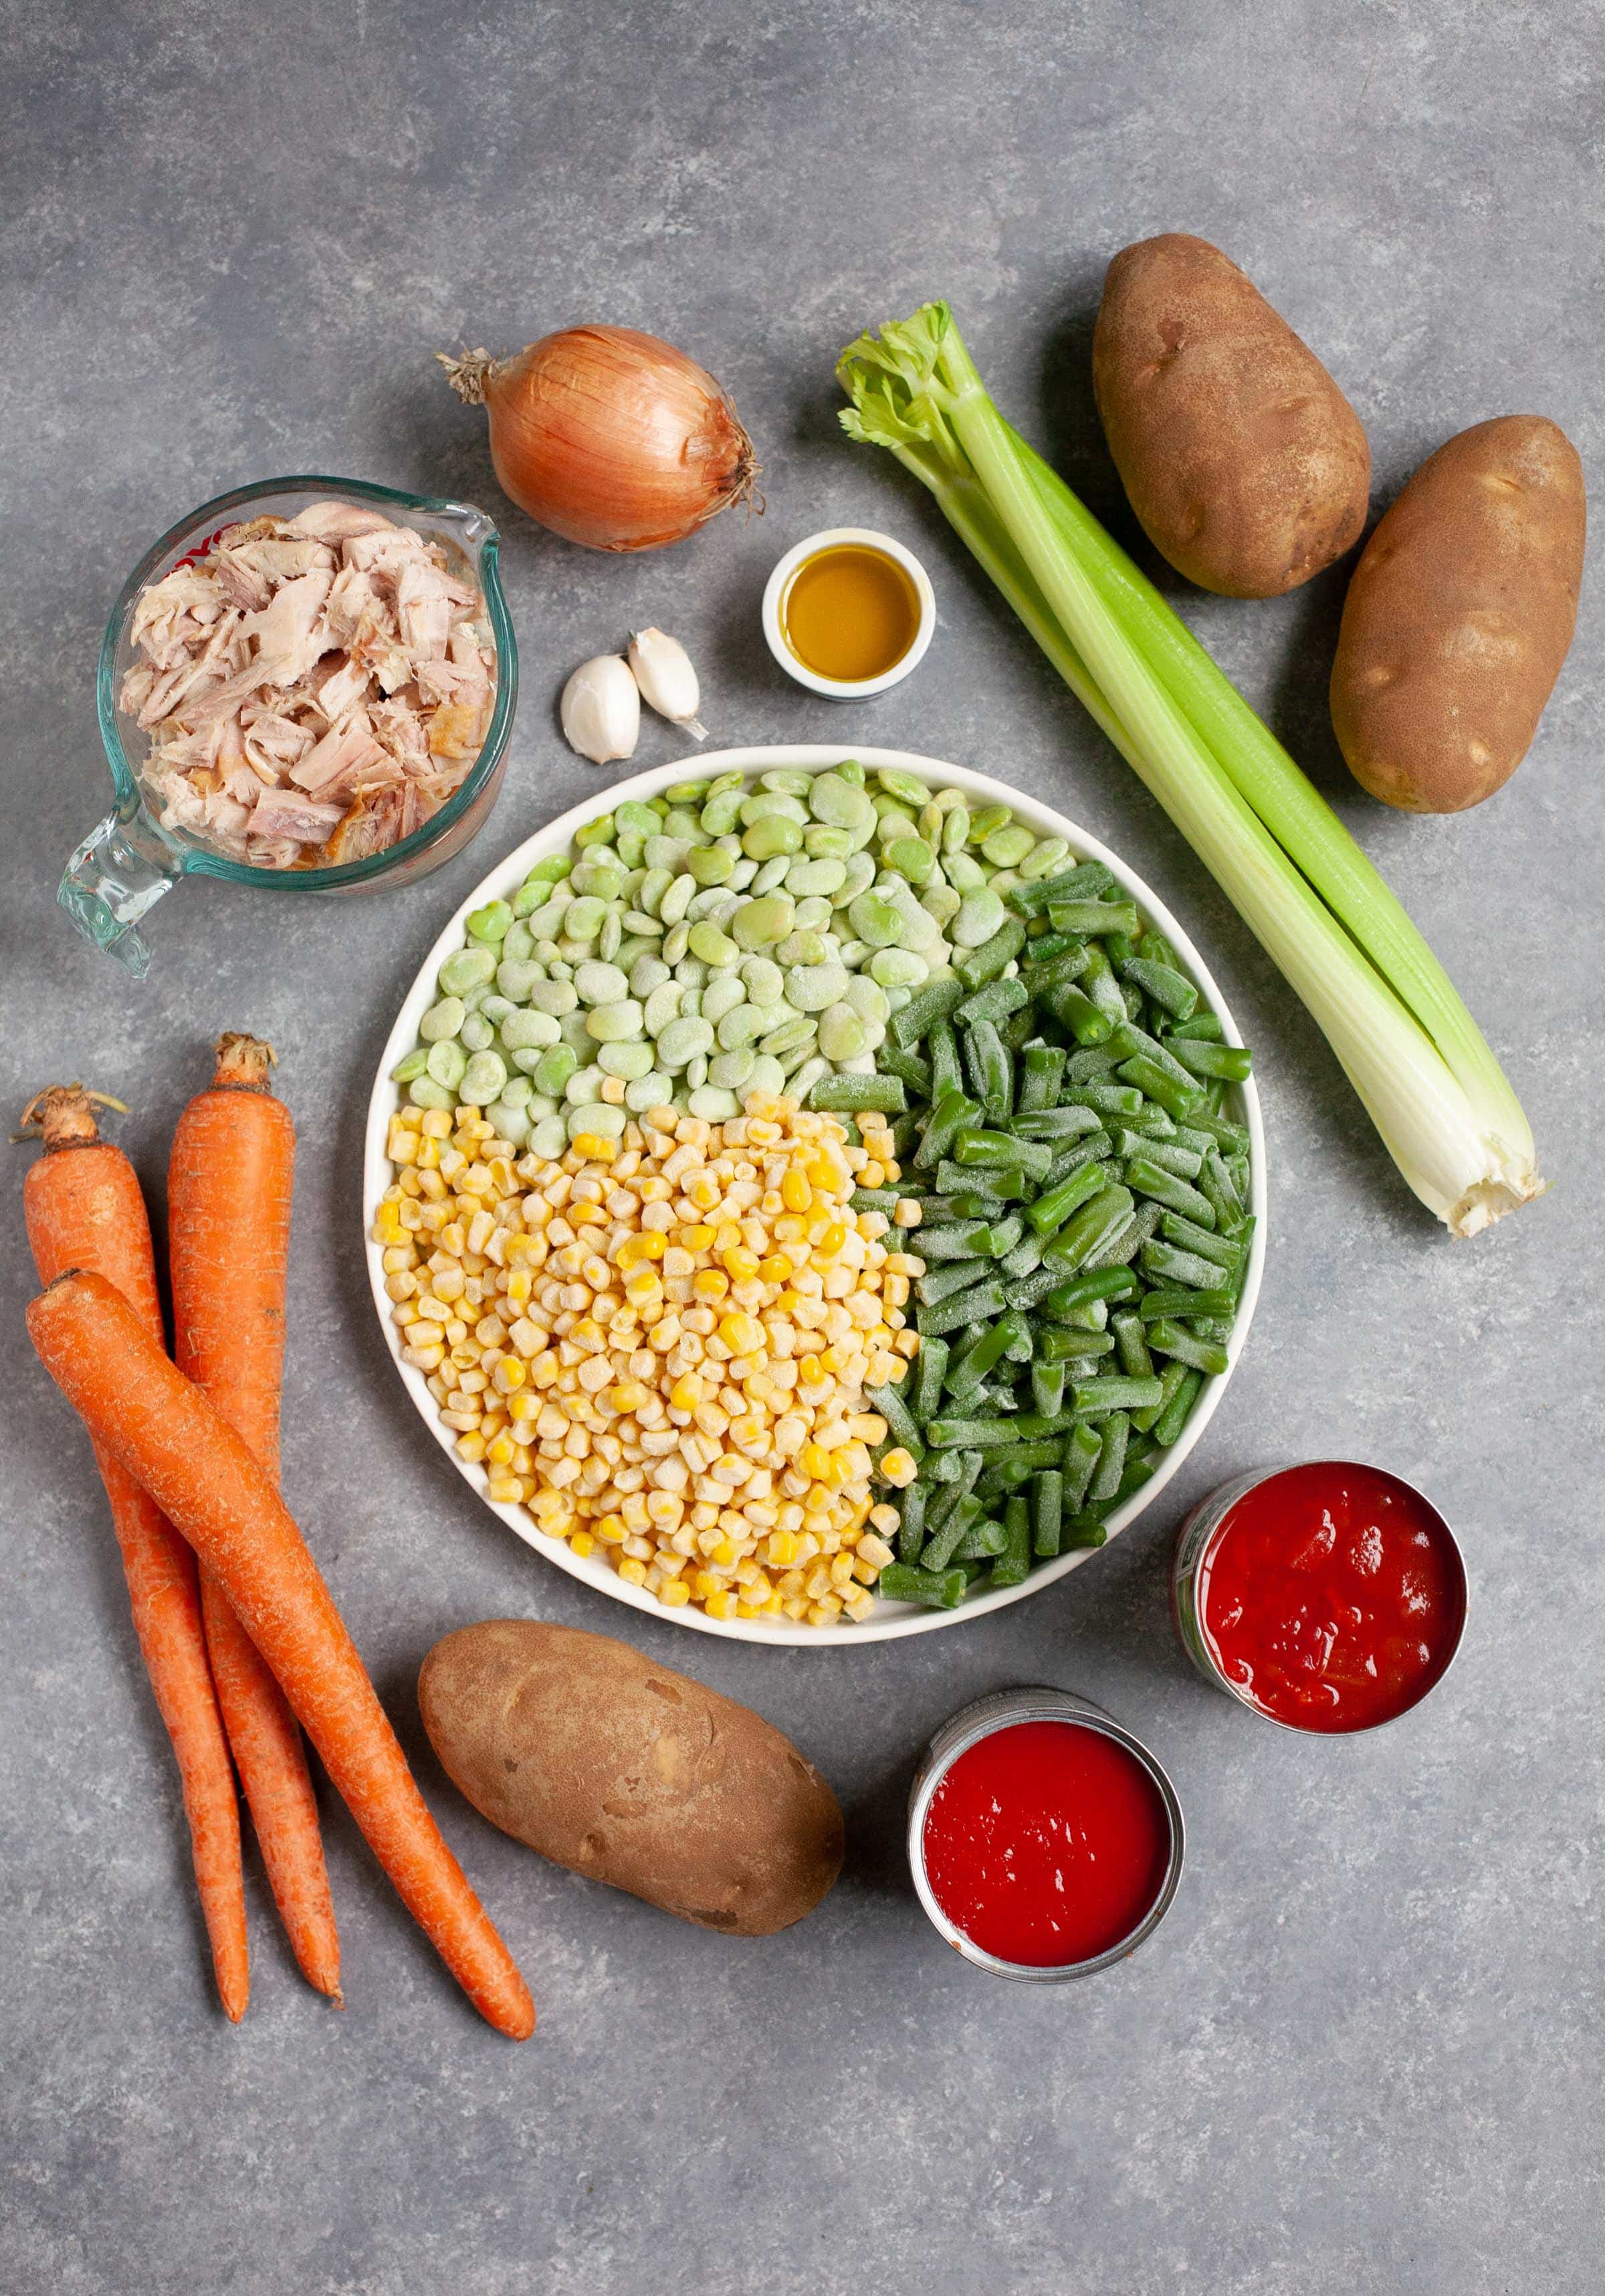 Ingredients for Turkey Vegetable Soup - carrots, turkey, veggies, potatoes, celery